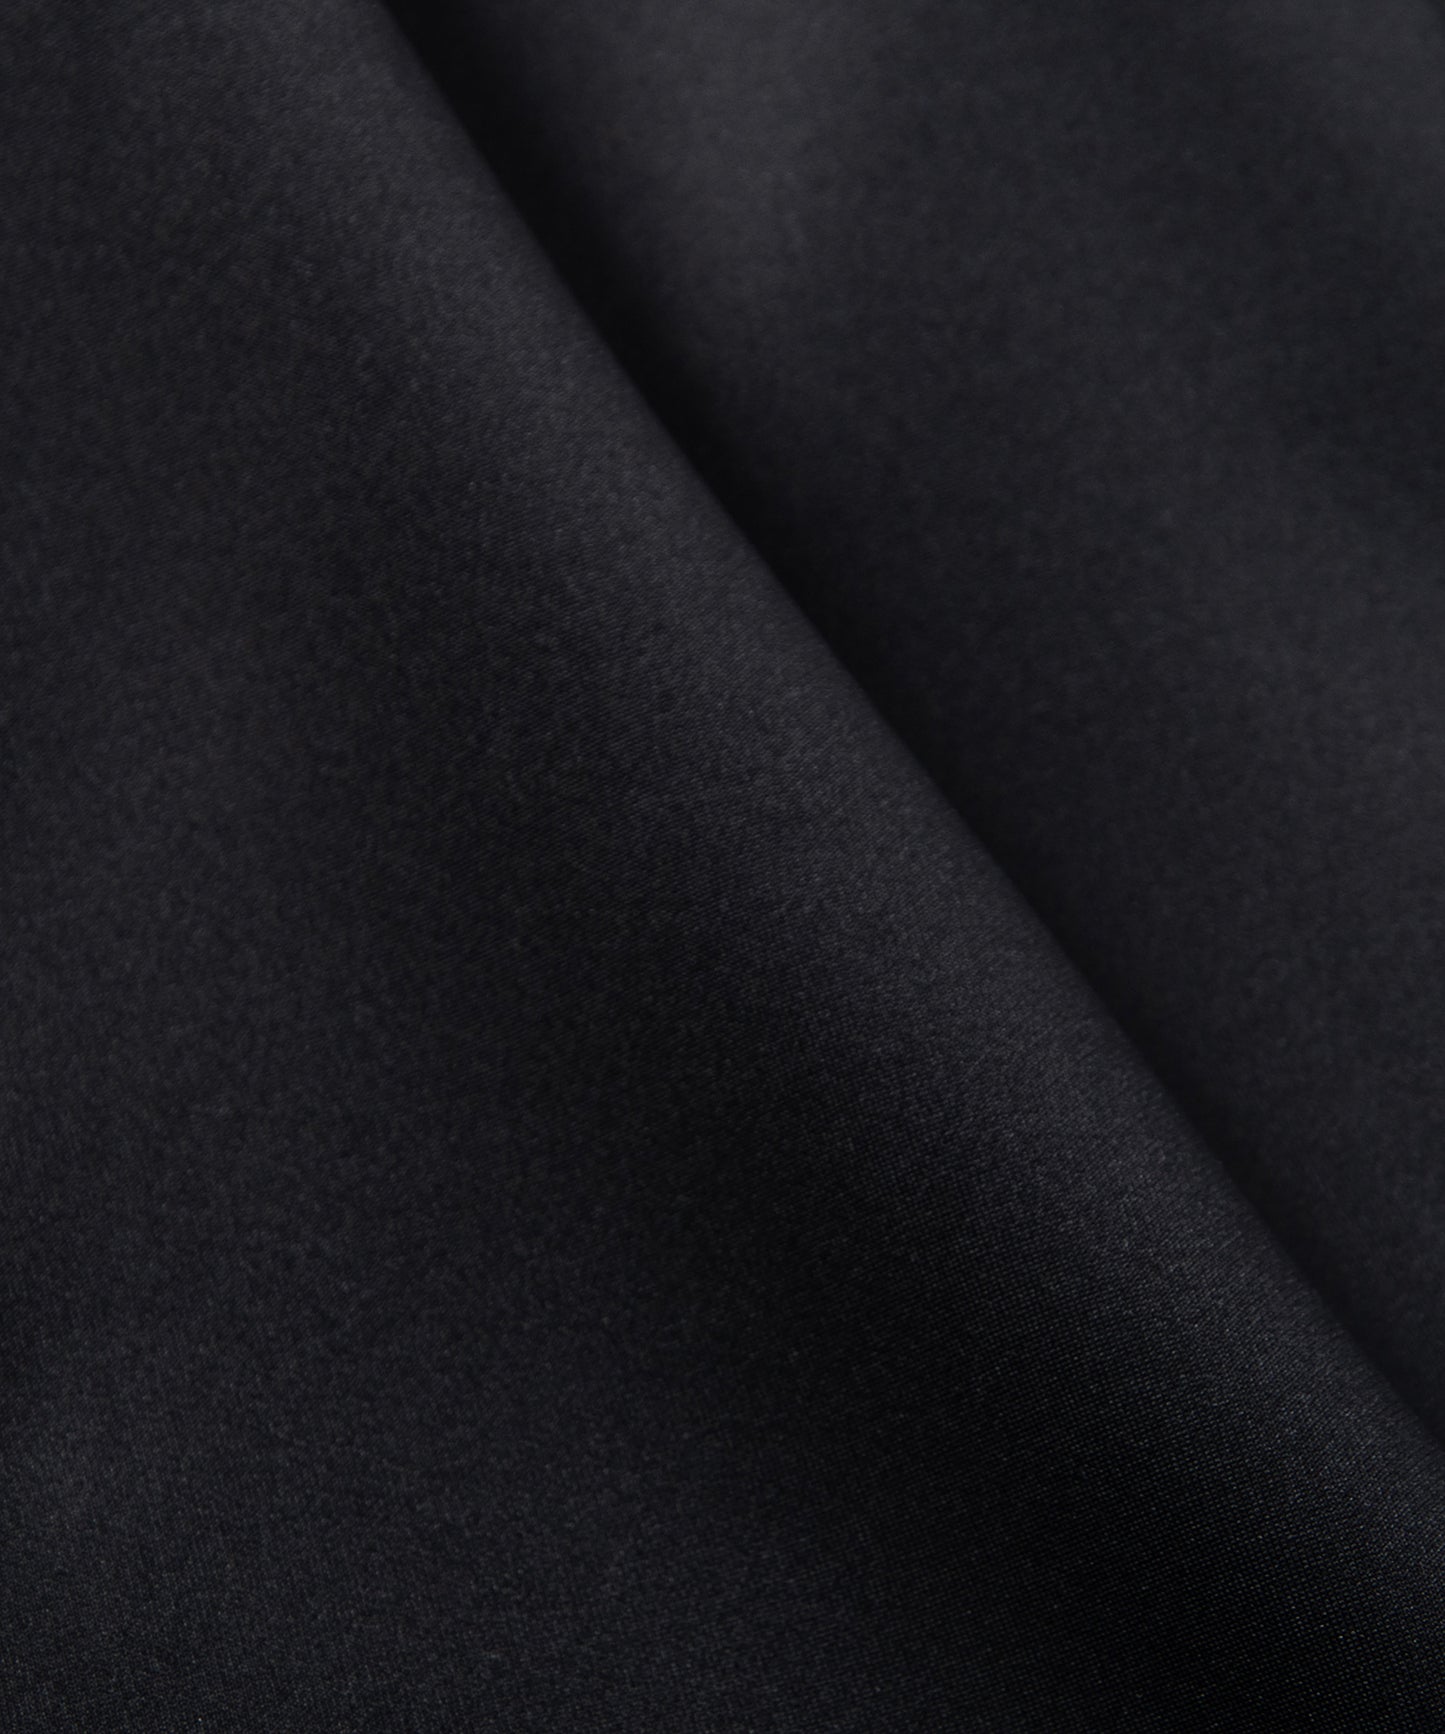 CUSTOM_ALT_TEXT: Fabric closeup on Paper Planes Basketball Short color Black.